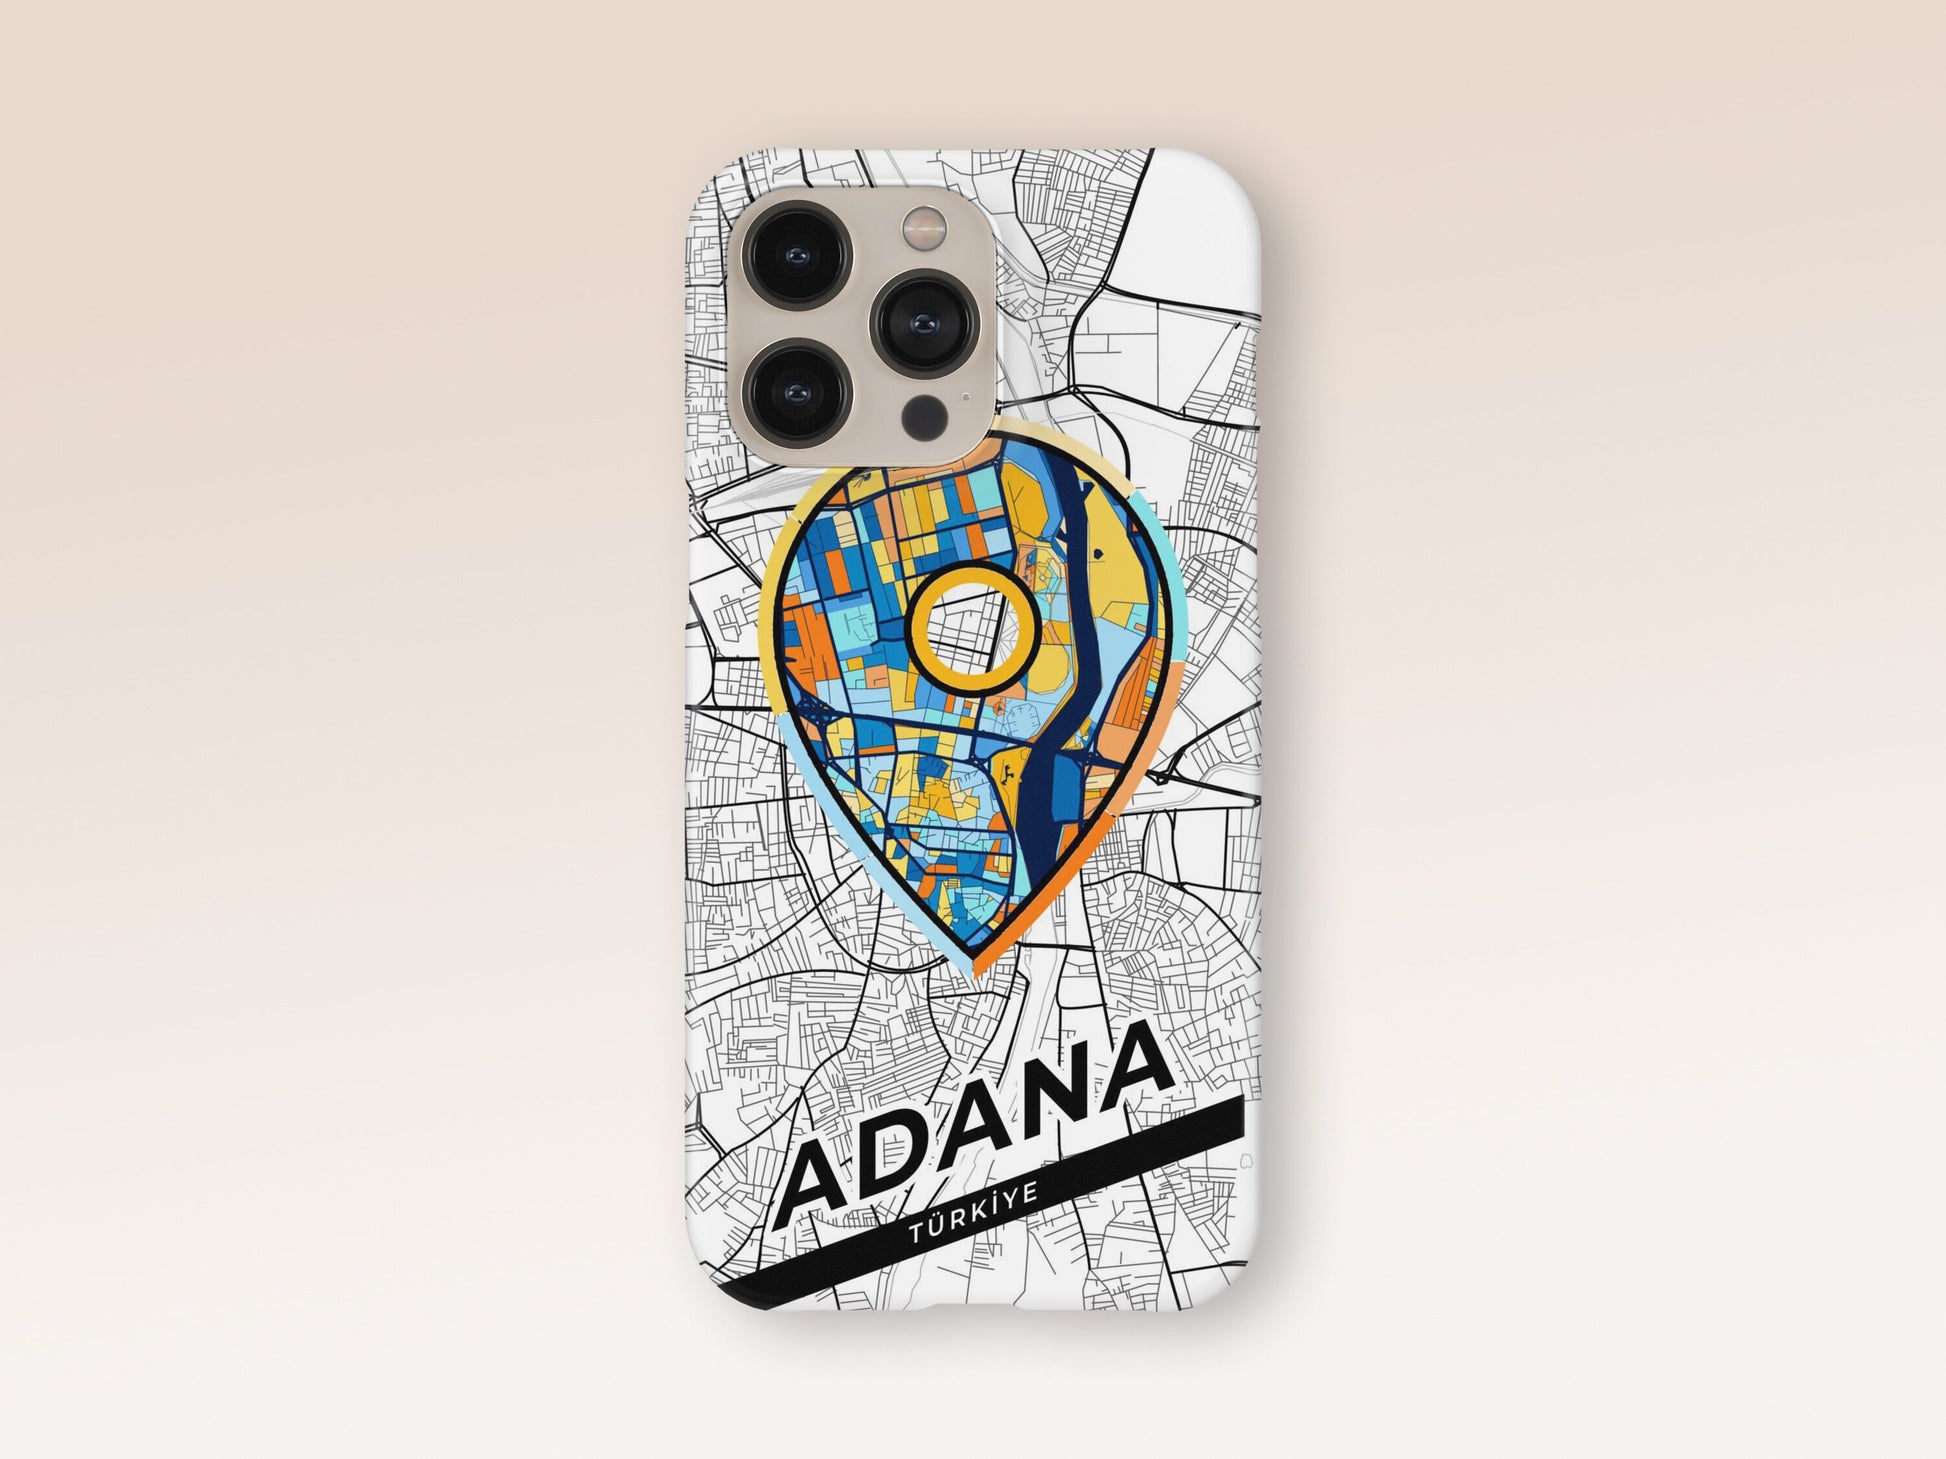 Adana Turkey slim phone case with colorful icon. Birthday, wedding or housewarming gift. Couple match cases. 1